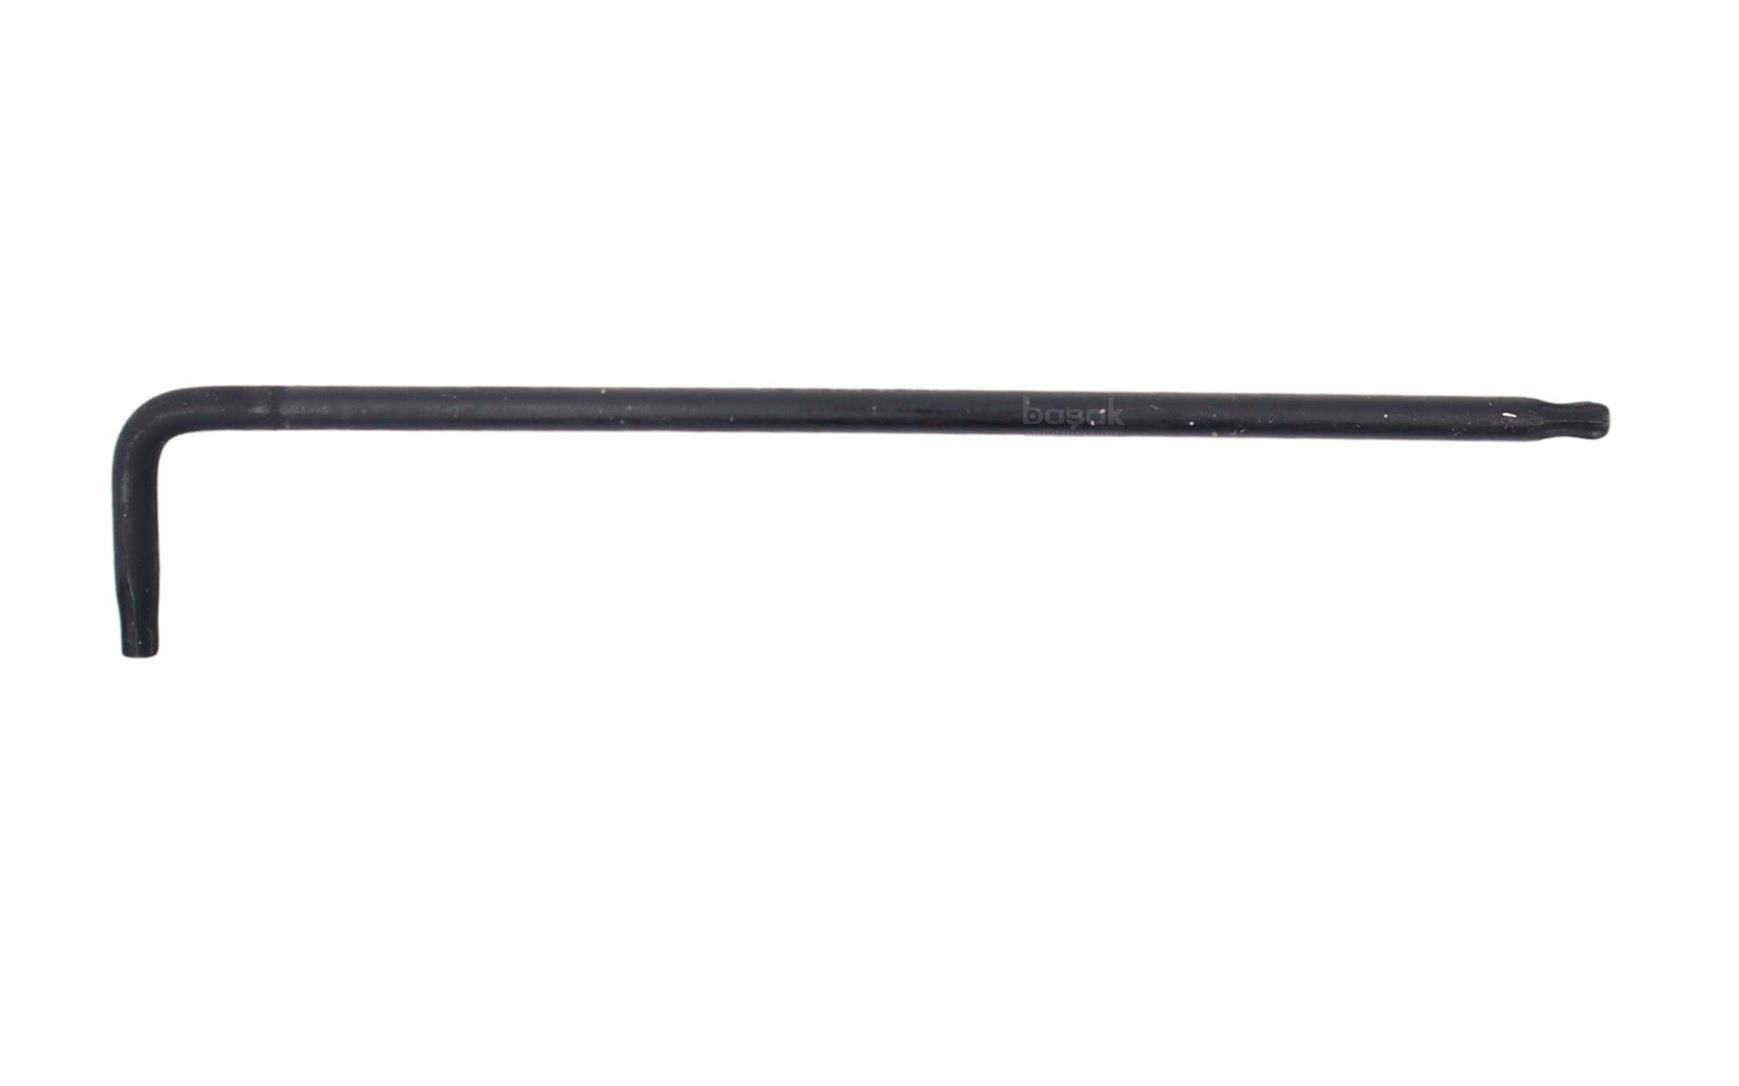 Ceta Form T15 Uzun Topbaşlı Torx Allen (Alyan) Anahtar 715B